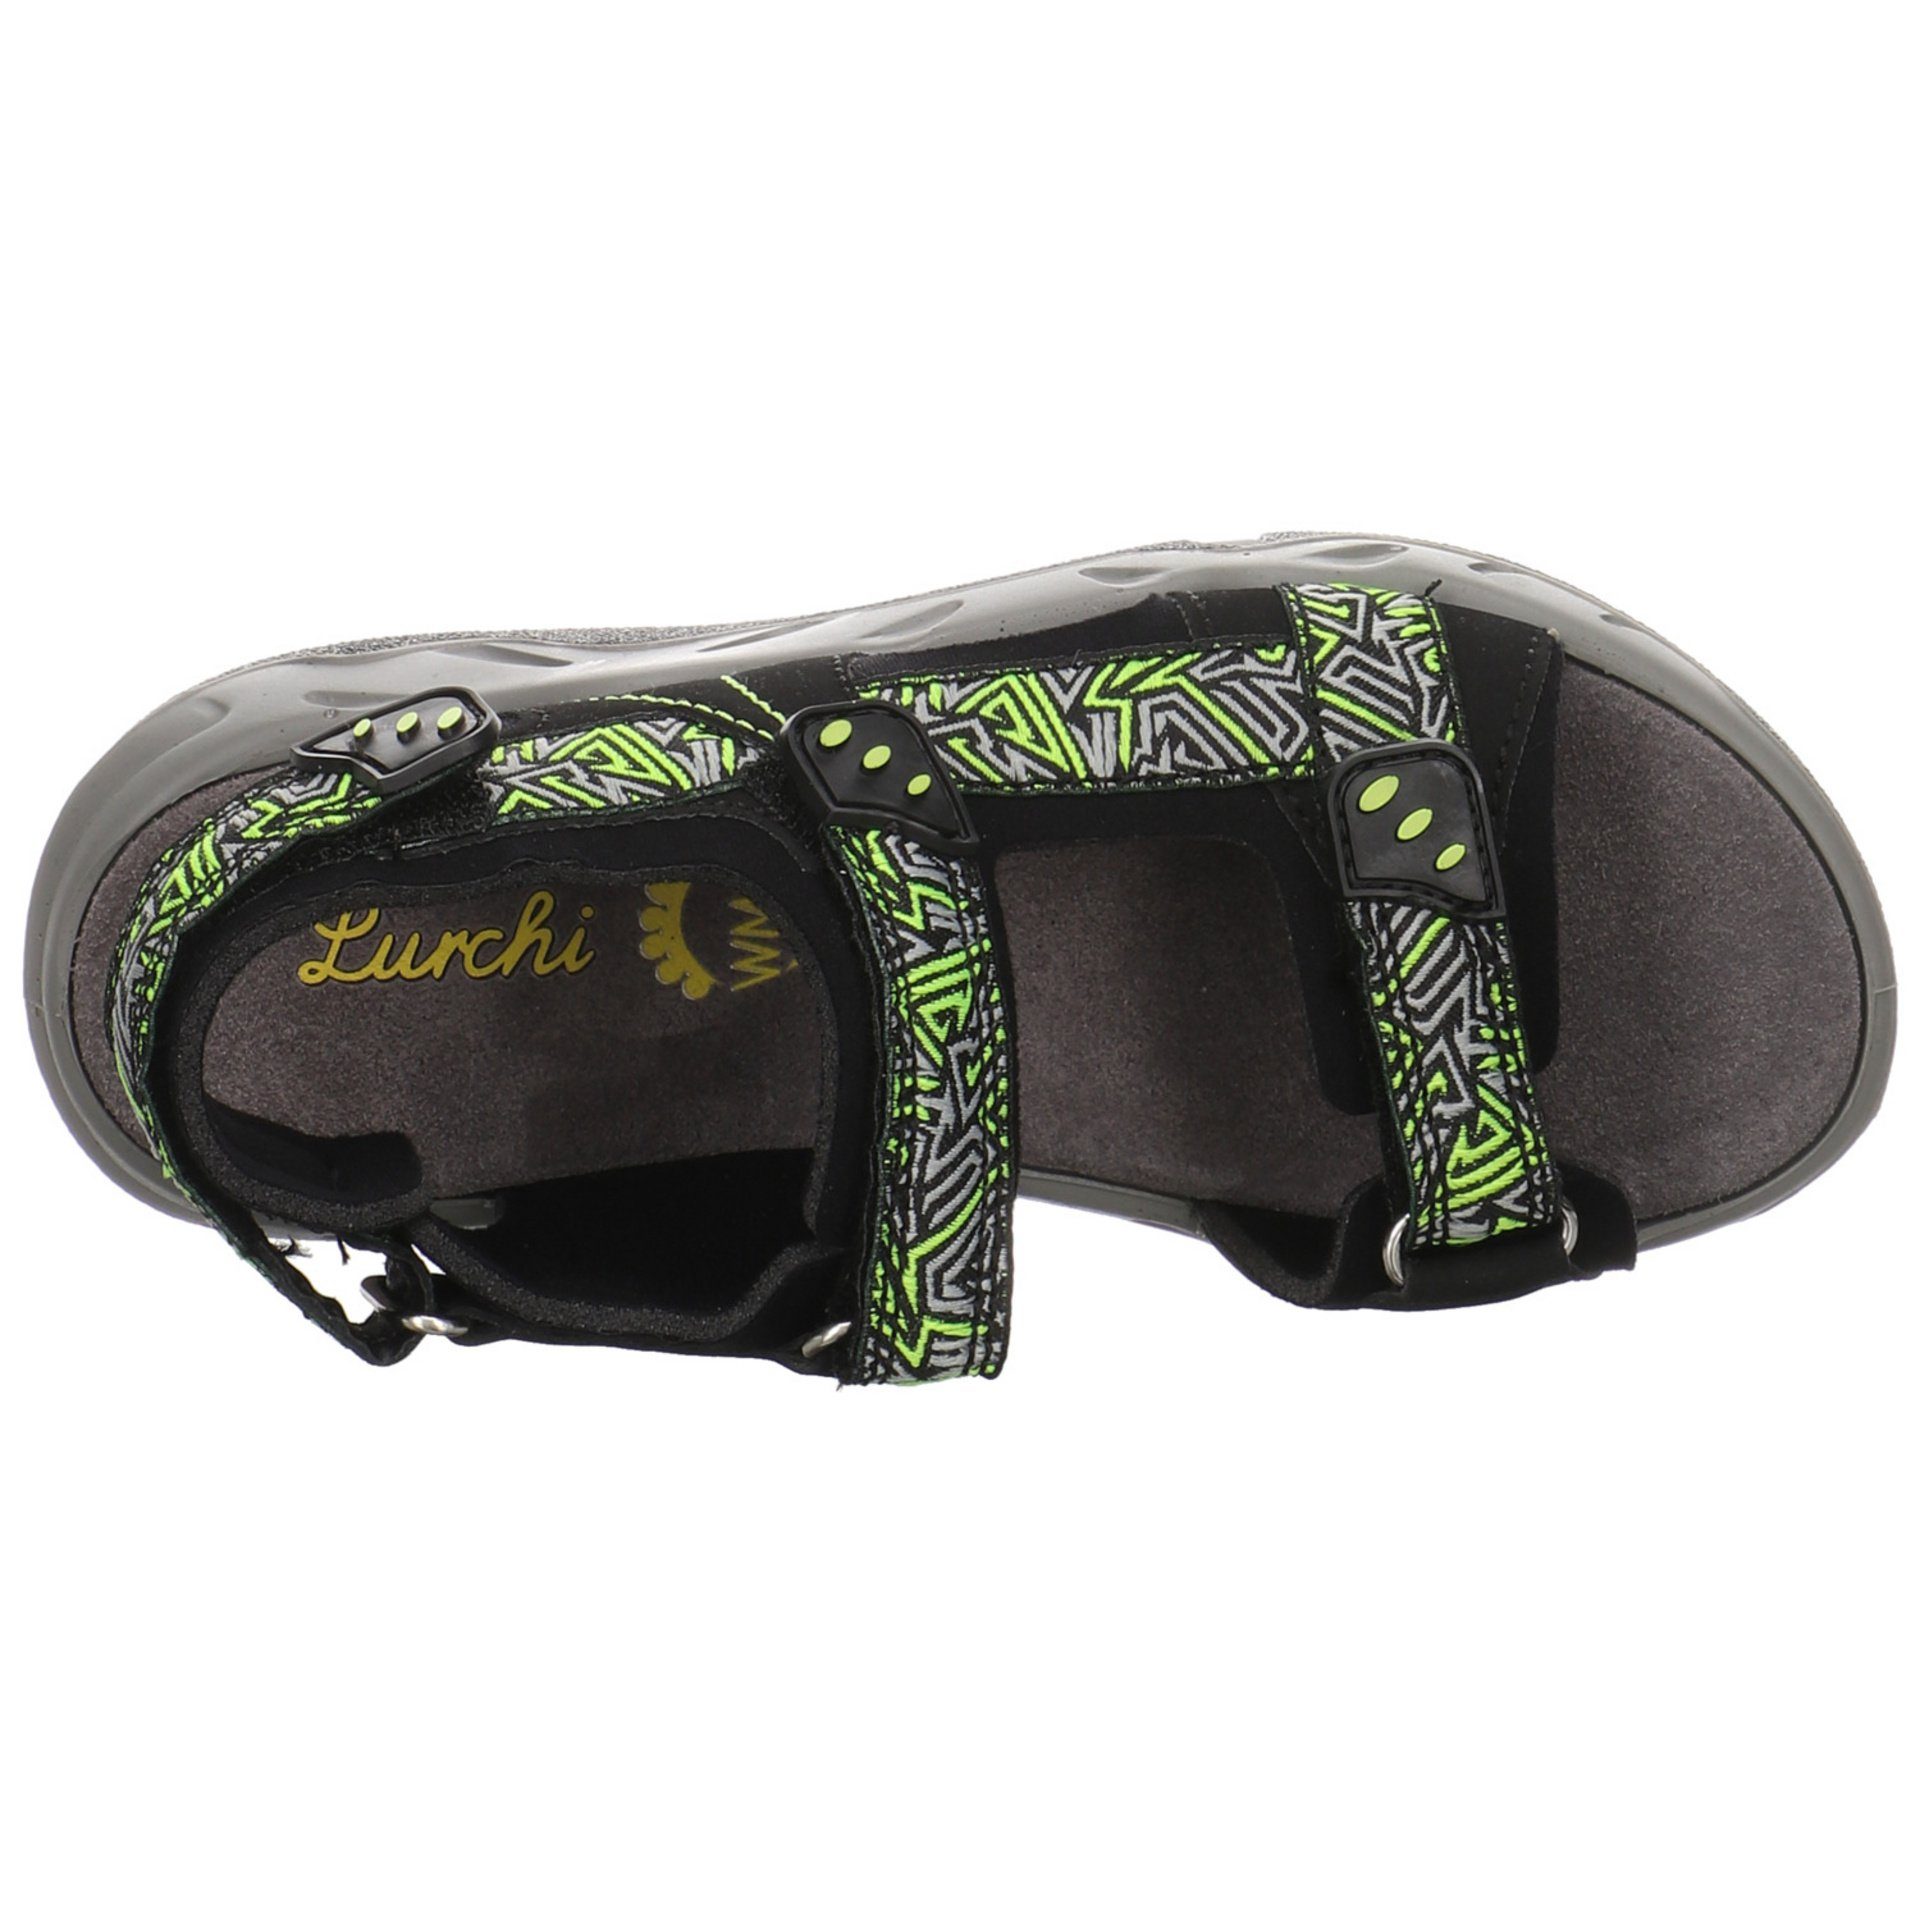 Sandale Lurchi Salamander Kinderschuhe Synthetikkombination Black Schuhe Multi Jungen Odono Sandale Sandalen